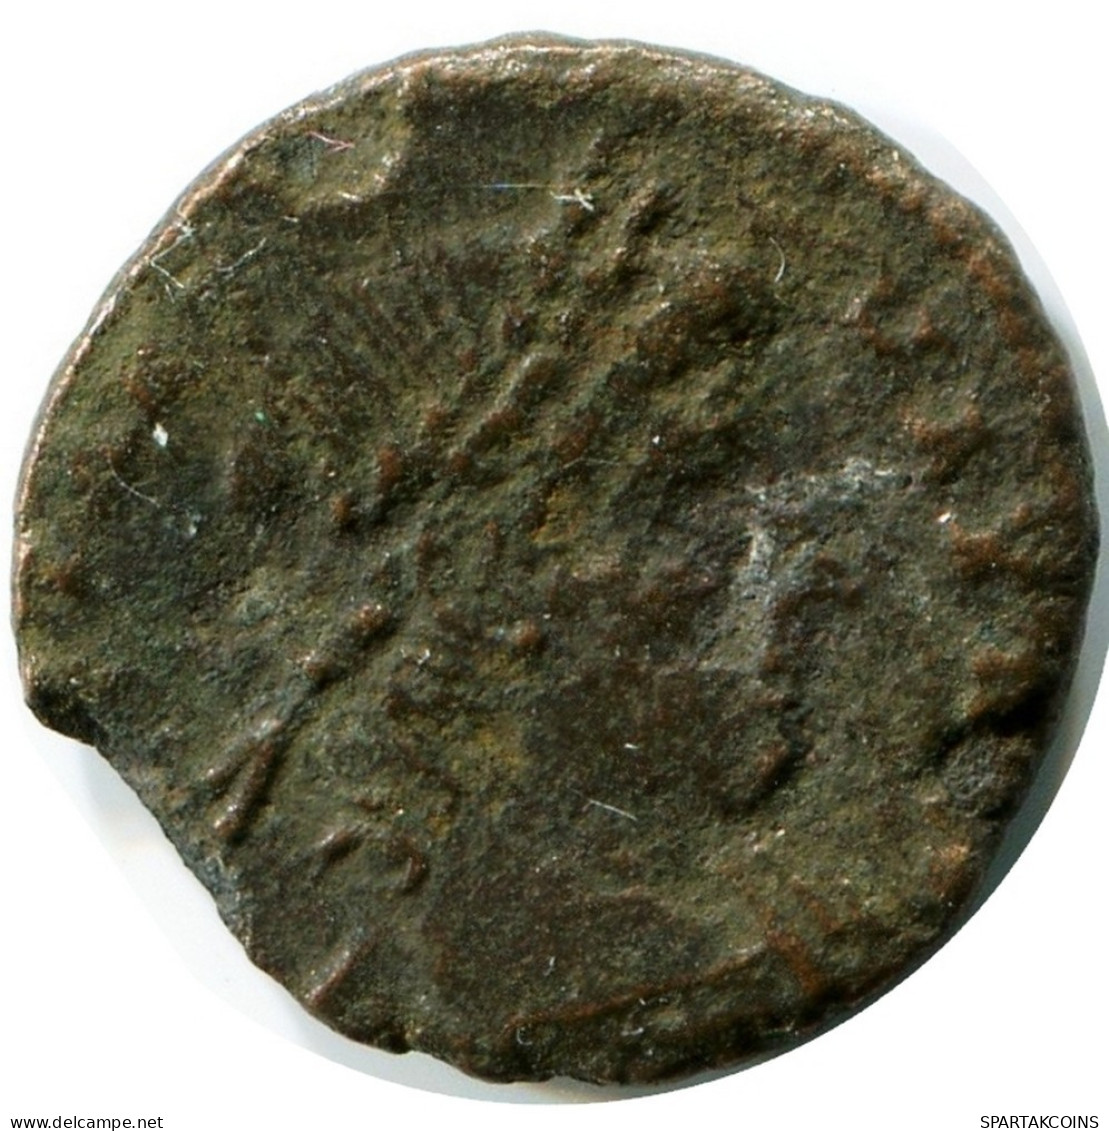 ROMAN Pièce MINTED IN ANTIOCH FOUND IN IHNASYAH HOARD EGYPT #ANC11284.14.F.A - L'Empire Chrétien (307 à 363)